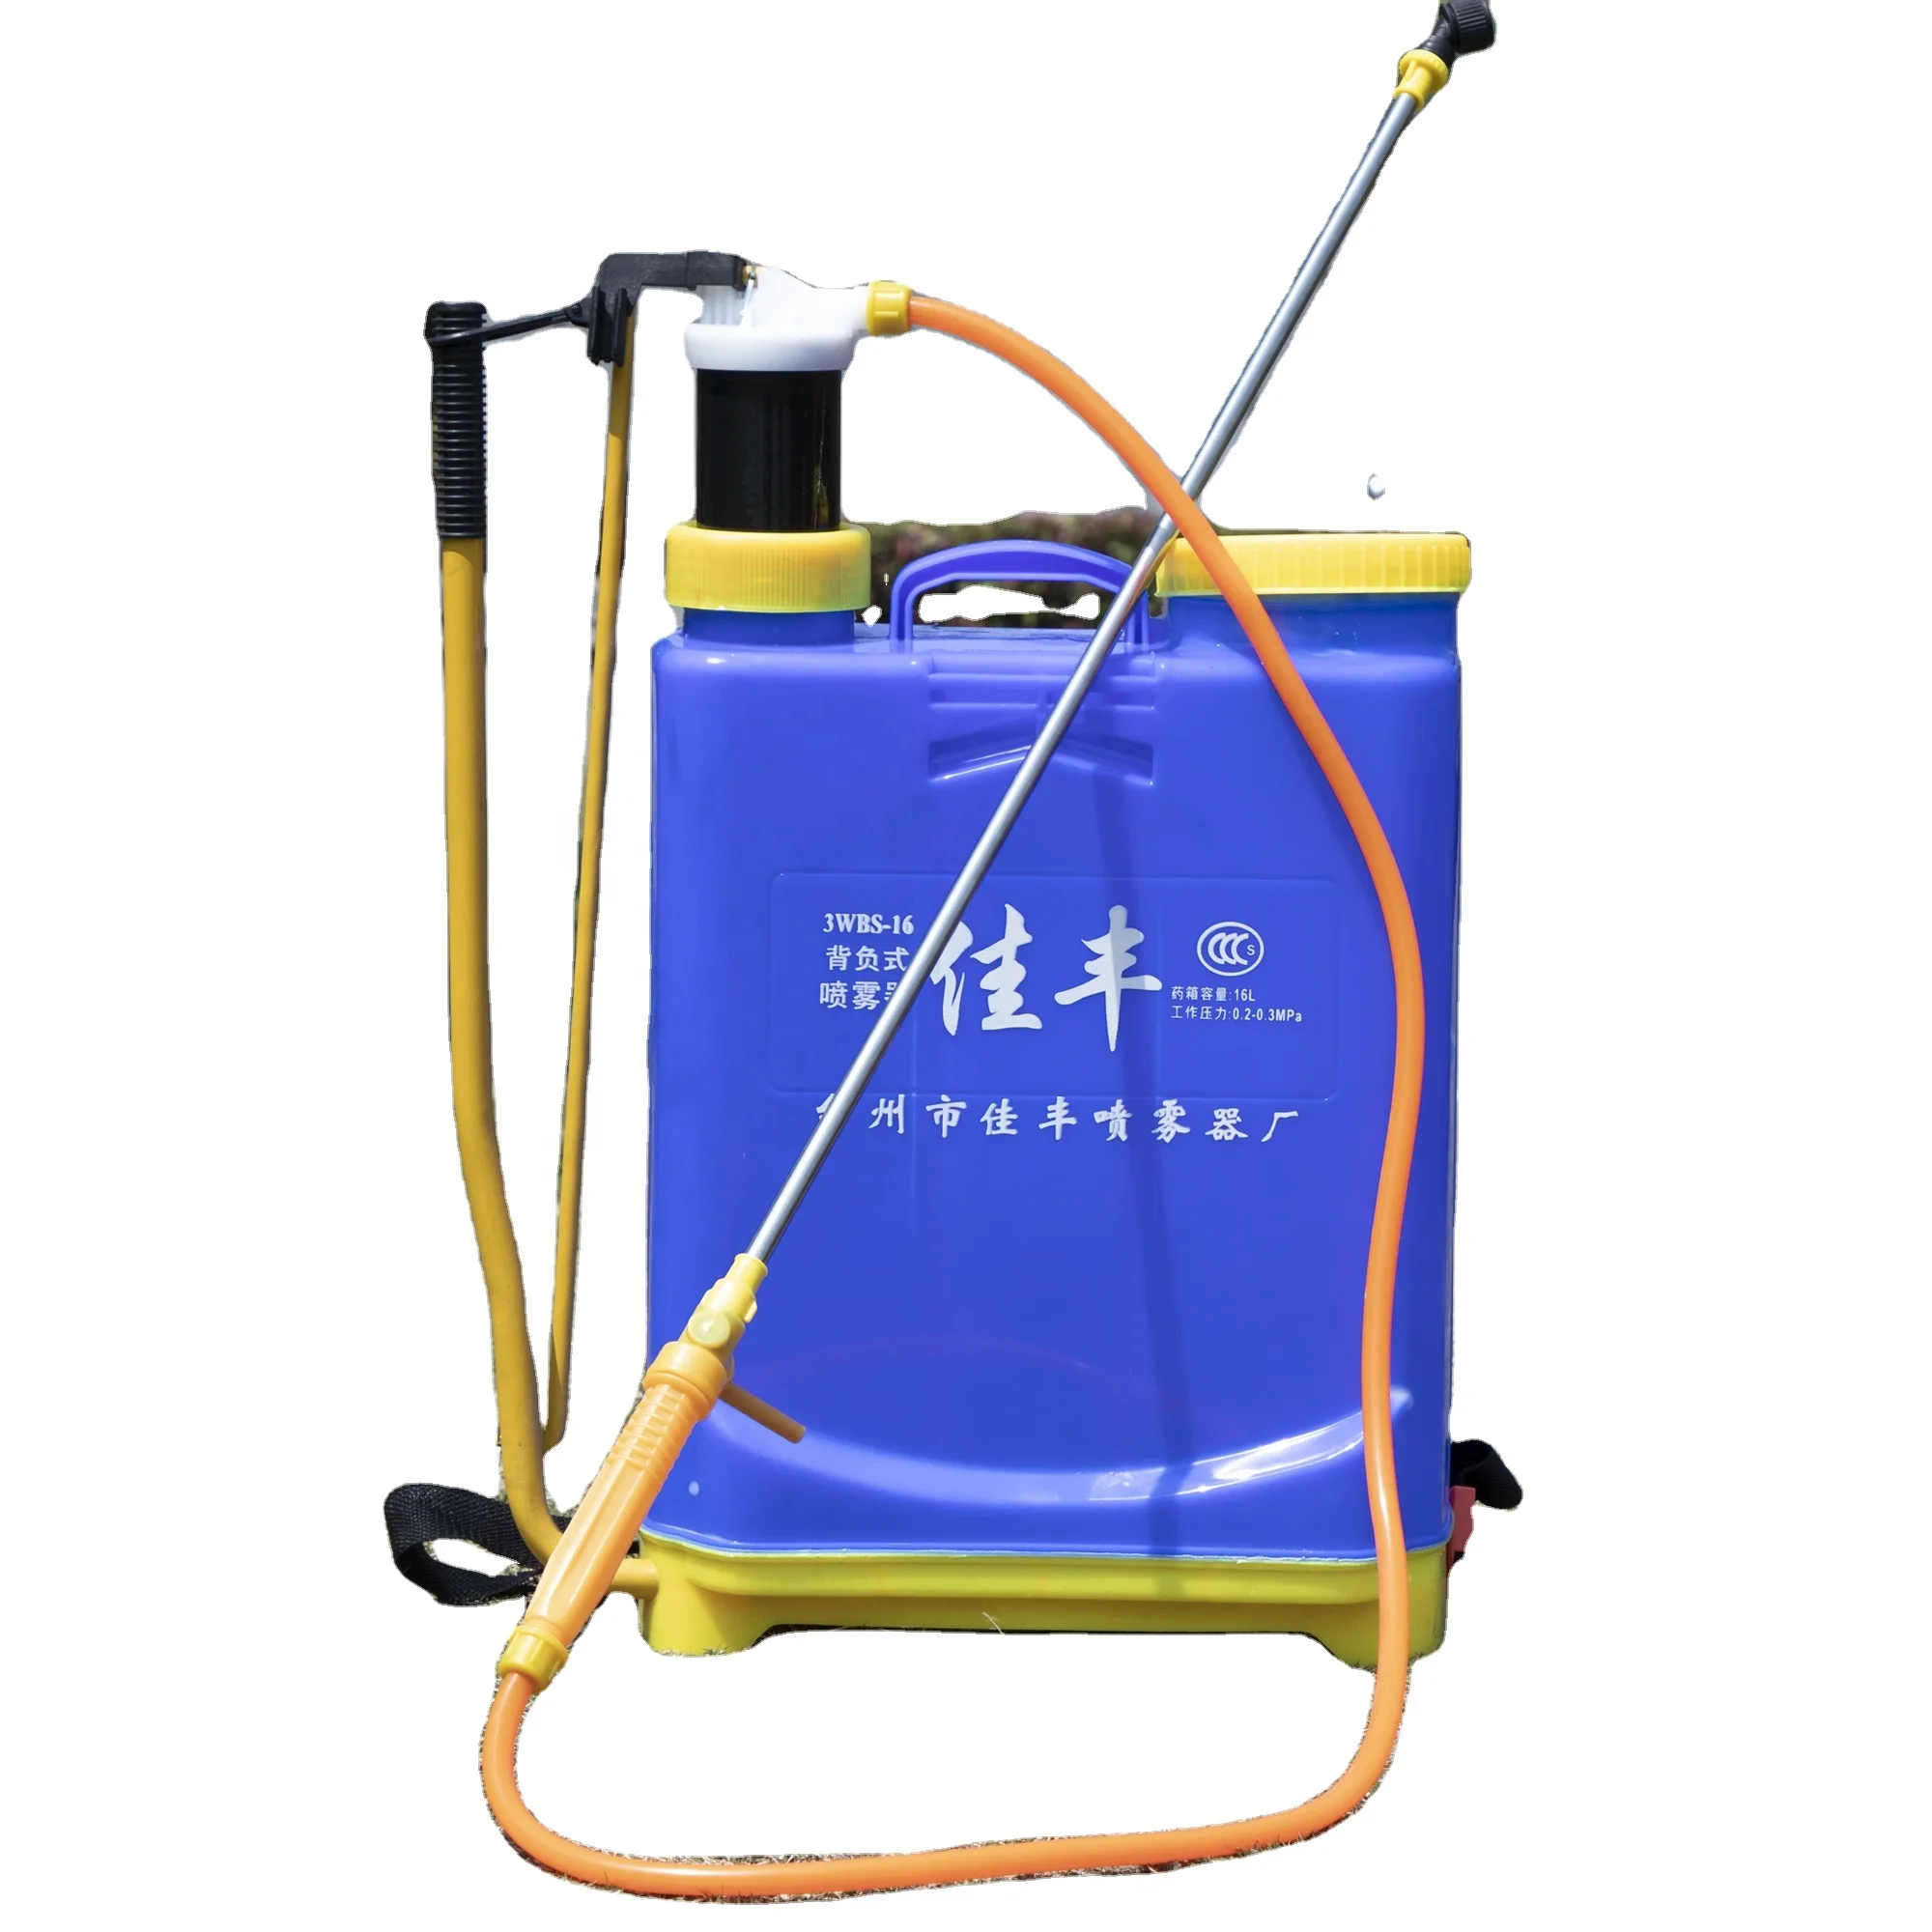 

Agricultural manual sprayer disinfection pesticide knapsack spray machine 16L sprayer, Customized